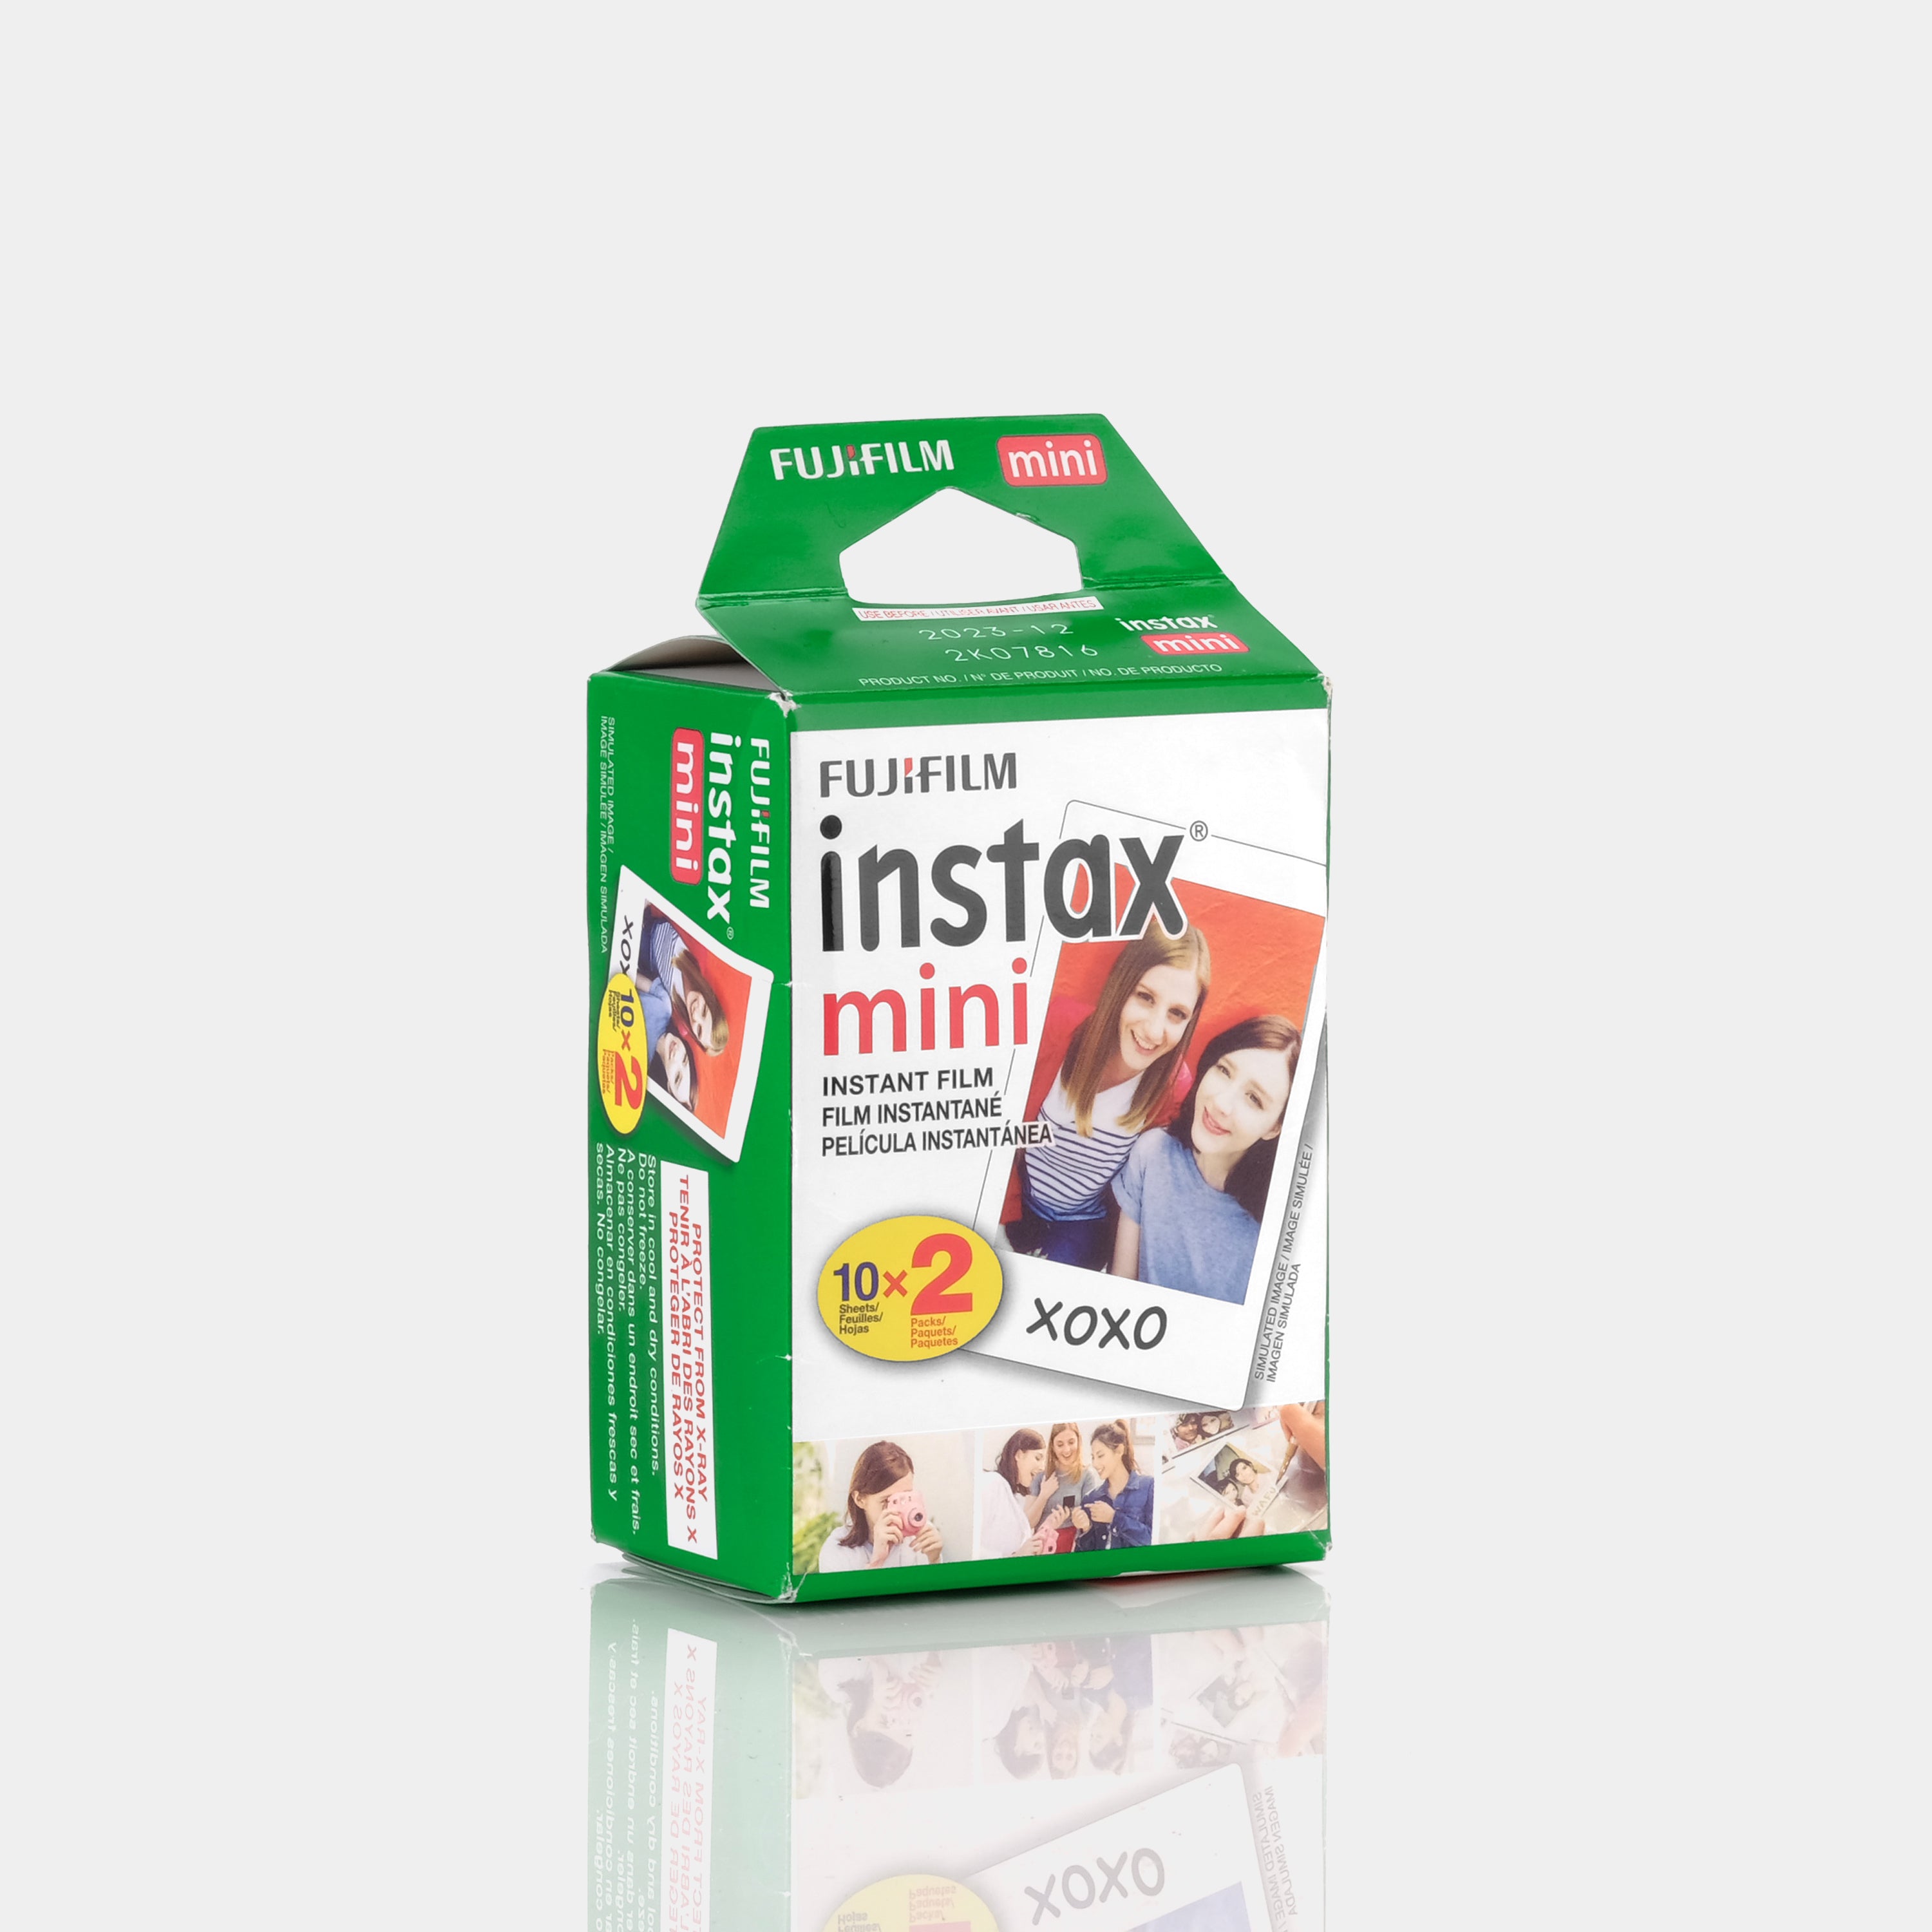 Discounted Fujifilm Instax Mini Instant Film (2 Pack)